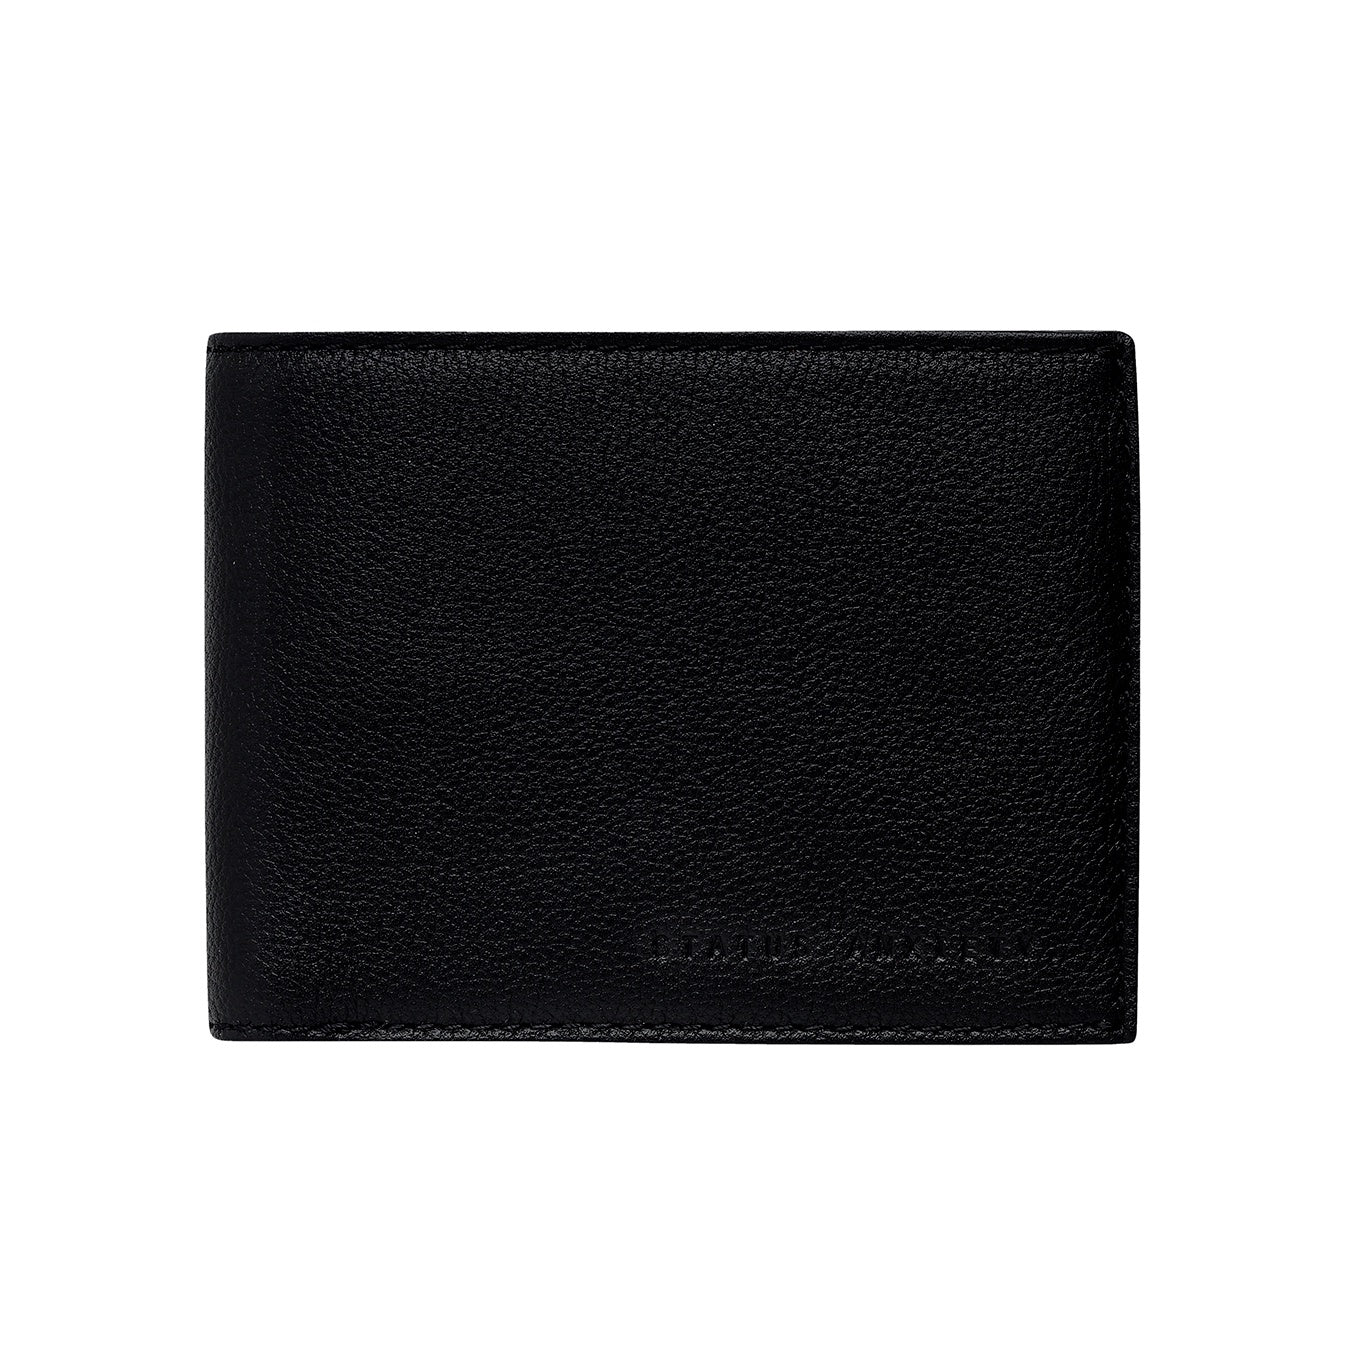 Noah leather wallet black